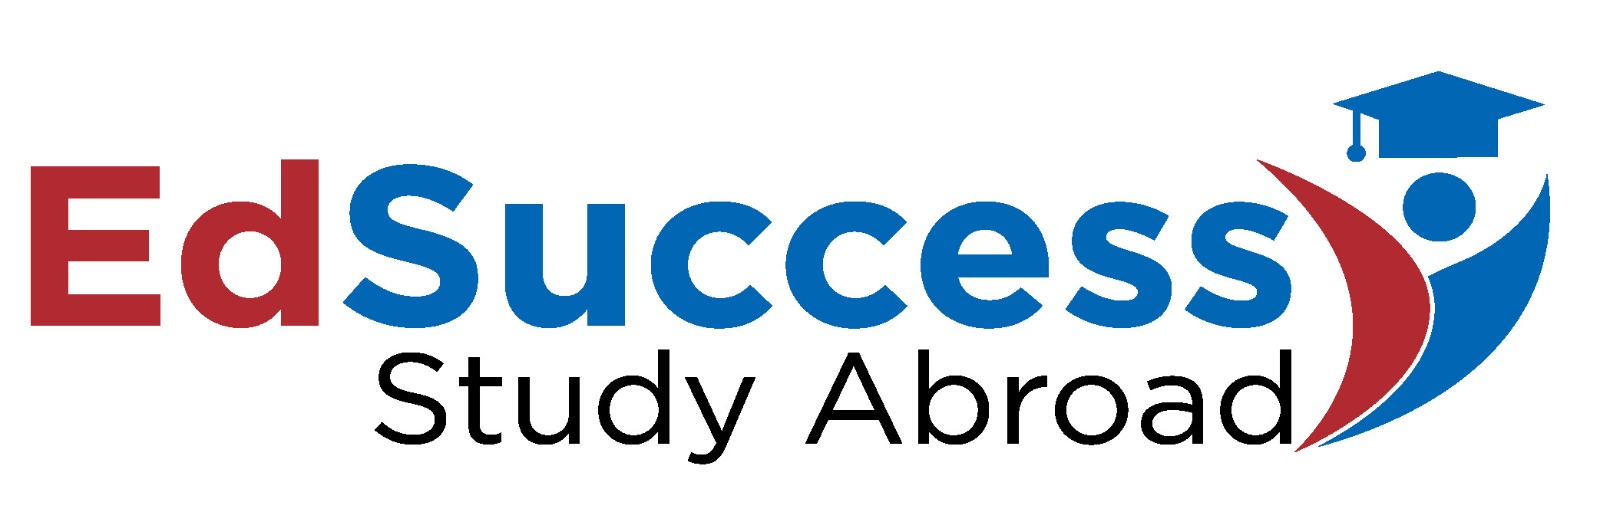 Success education logo Royalty Free Vector Image